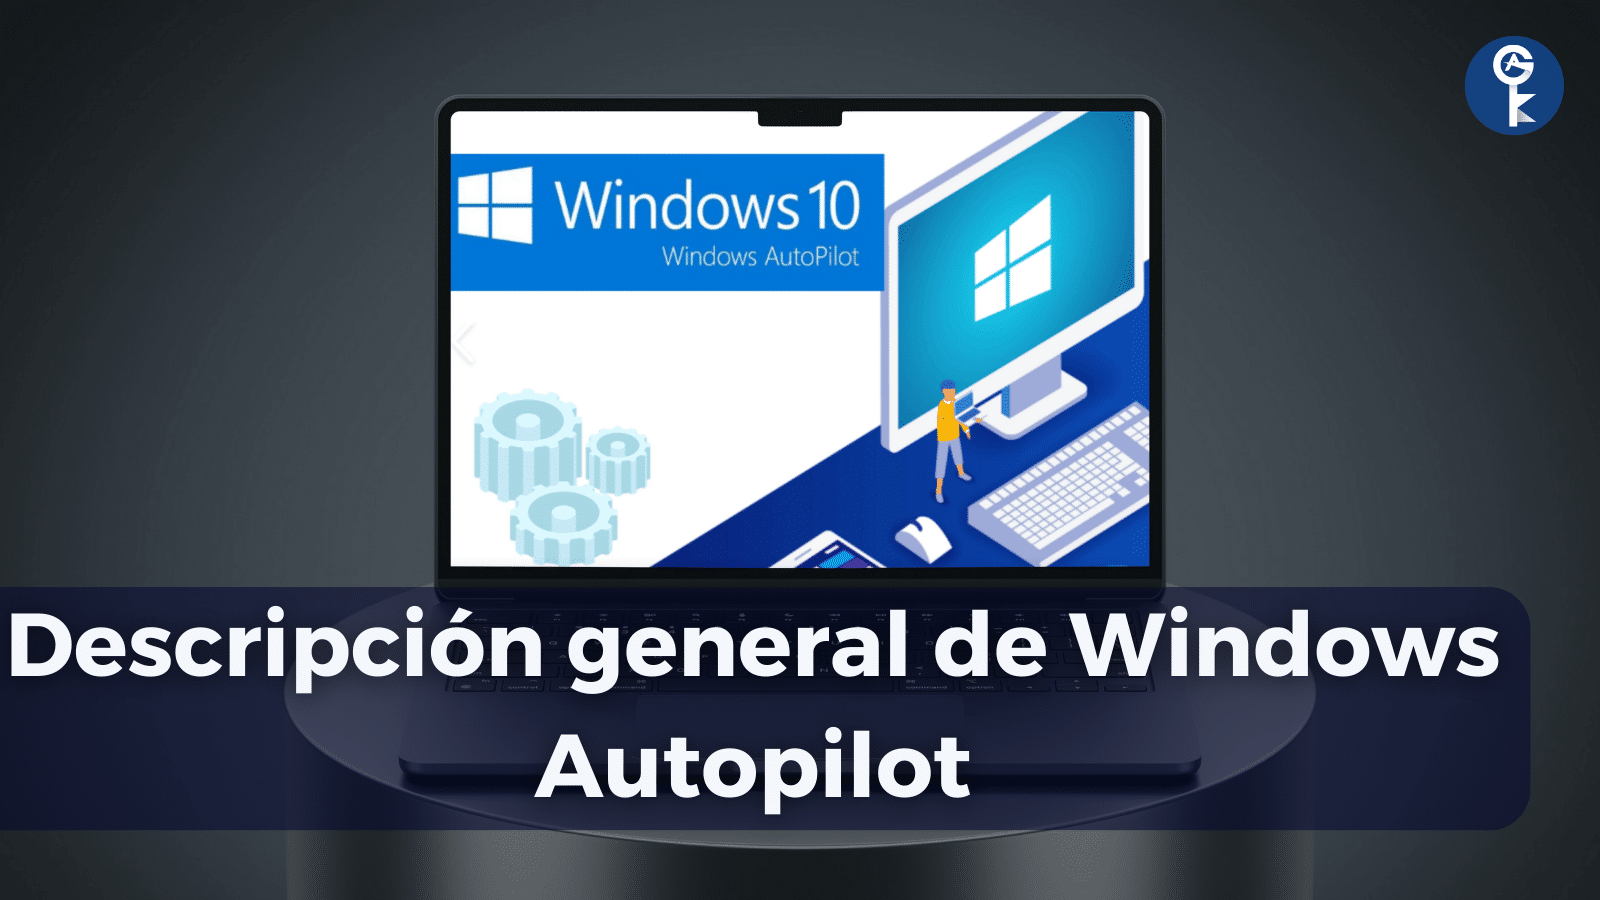 Windows Autopilot